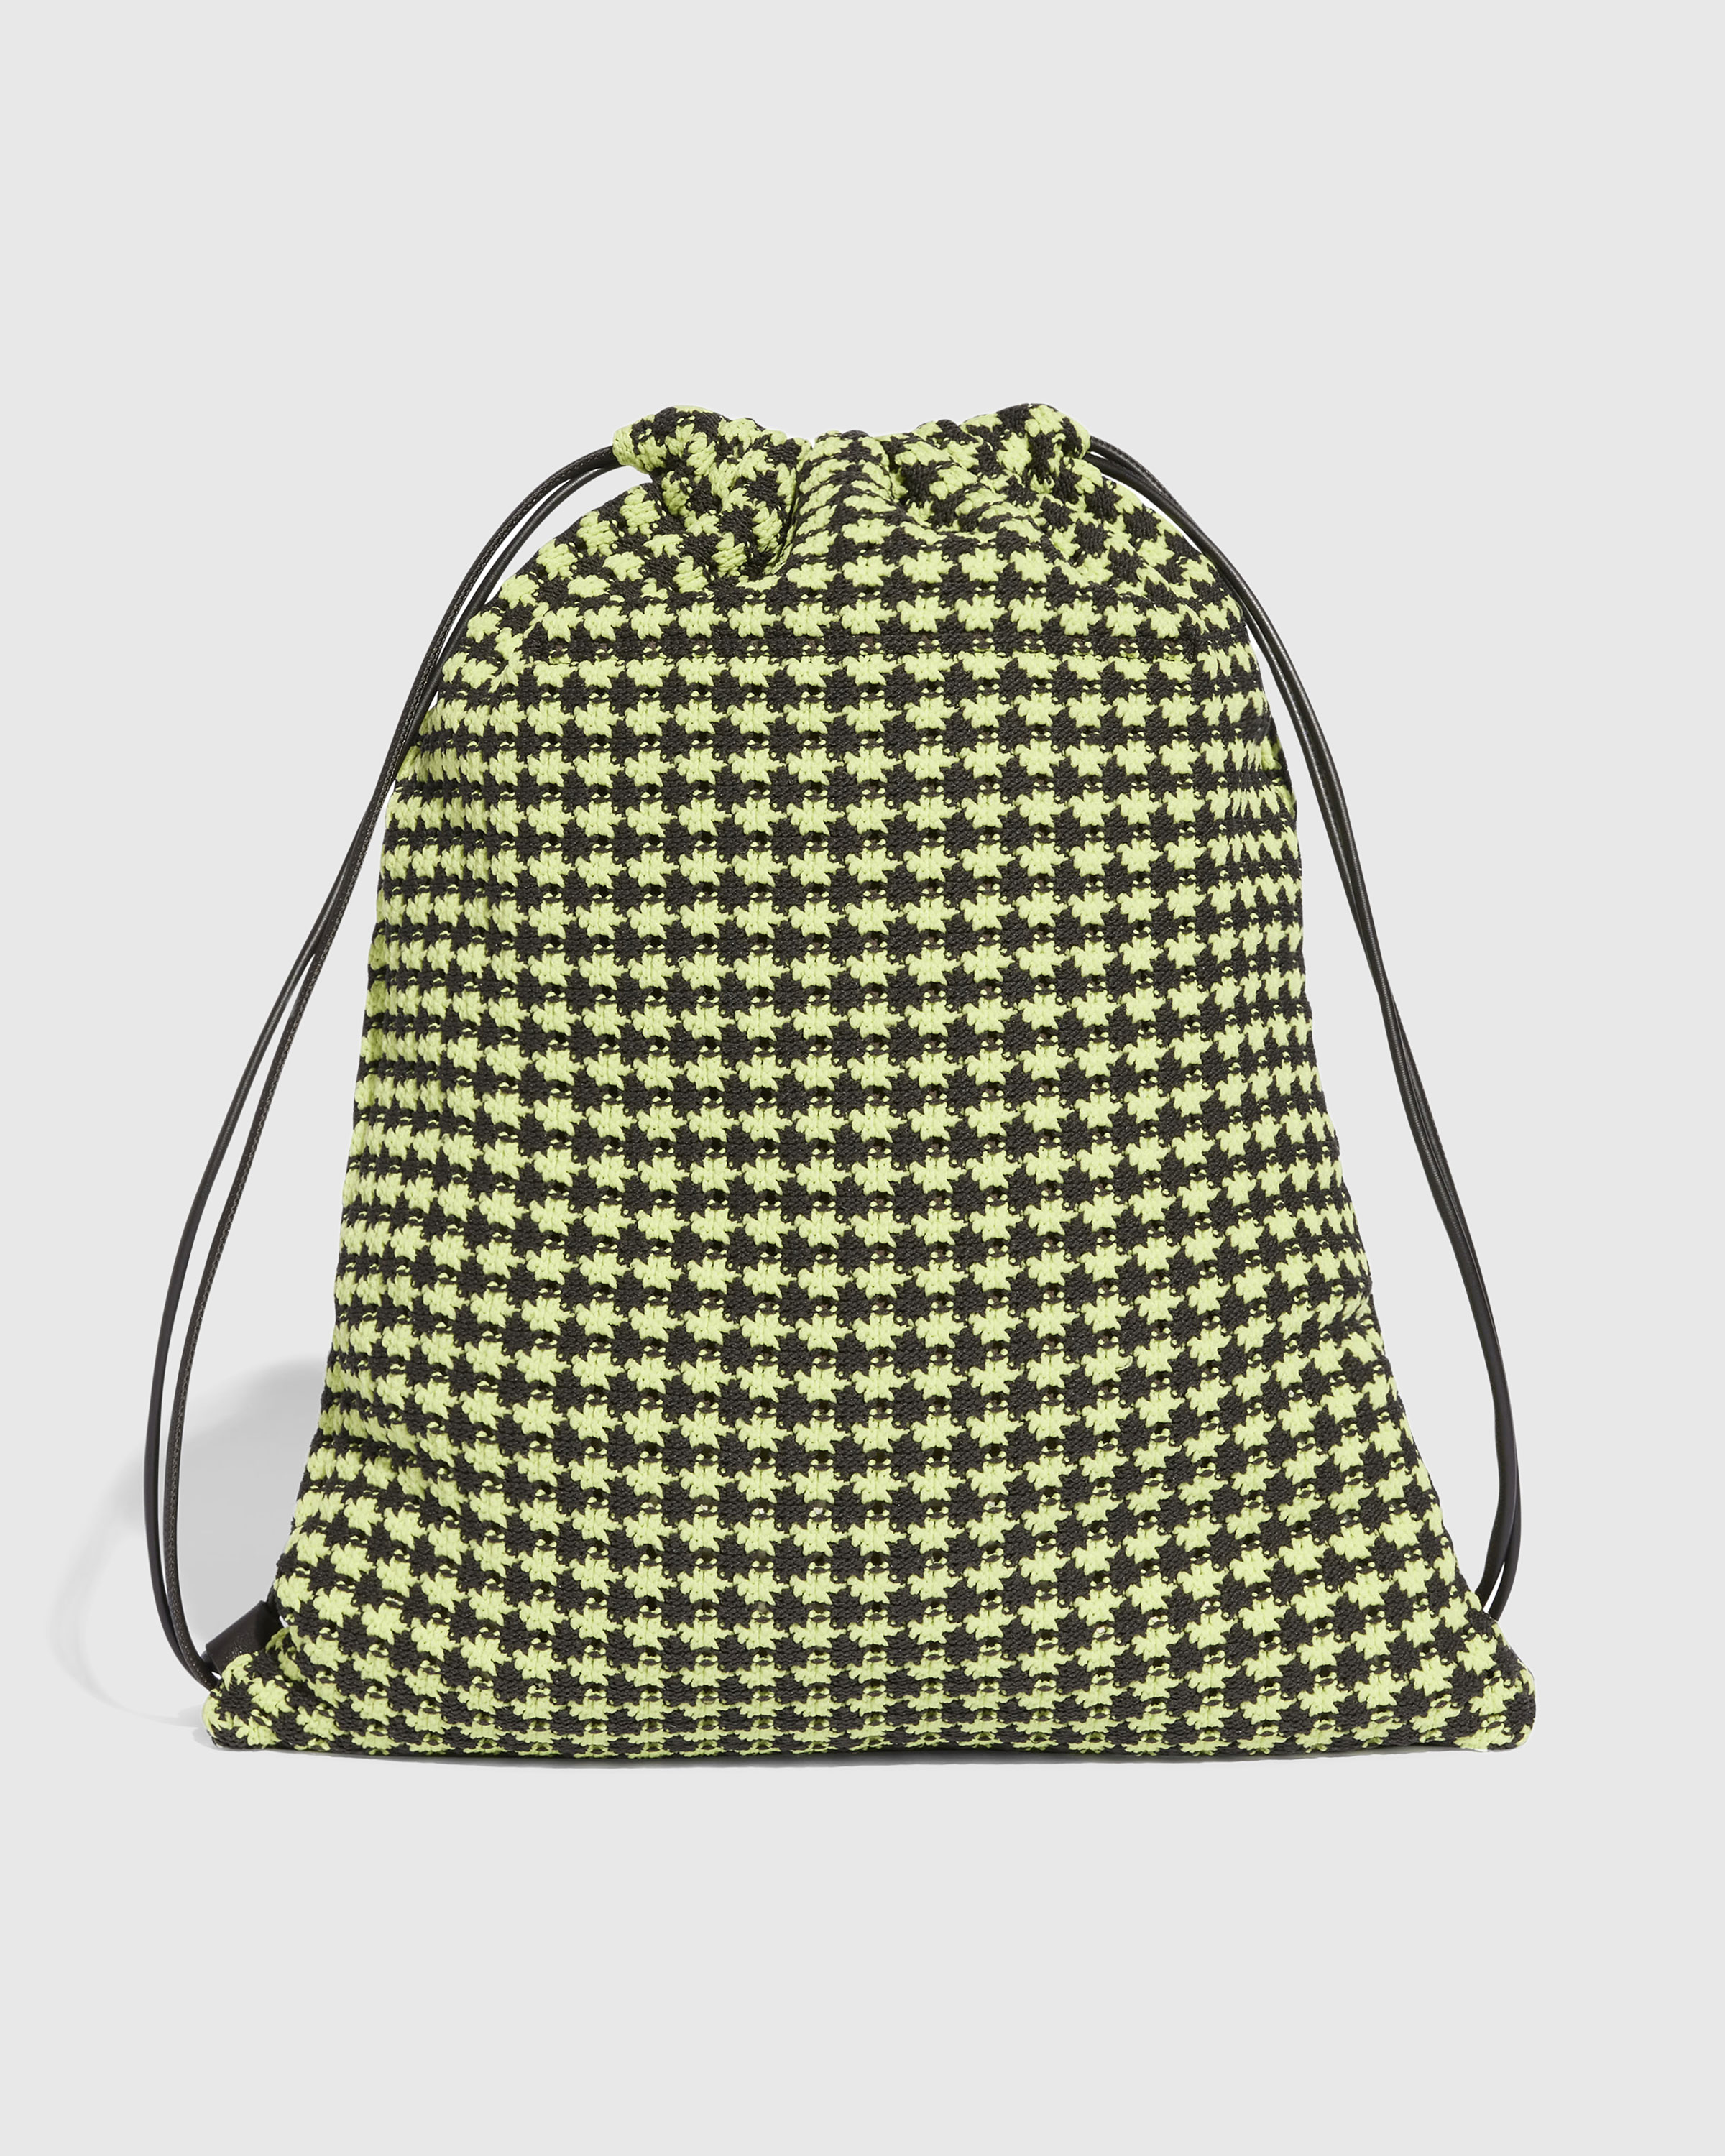 Adidas x Wales Bonner – Crochet Bag Semi Frozen Yellow/Night Brown - Shoulder Bags - Yellow - Image 3